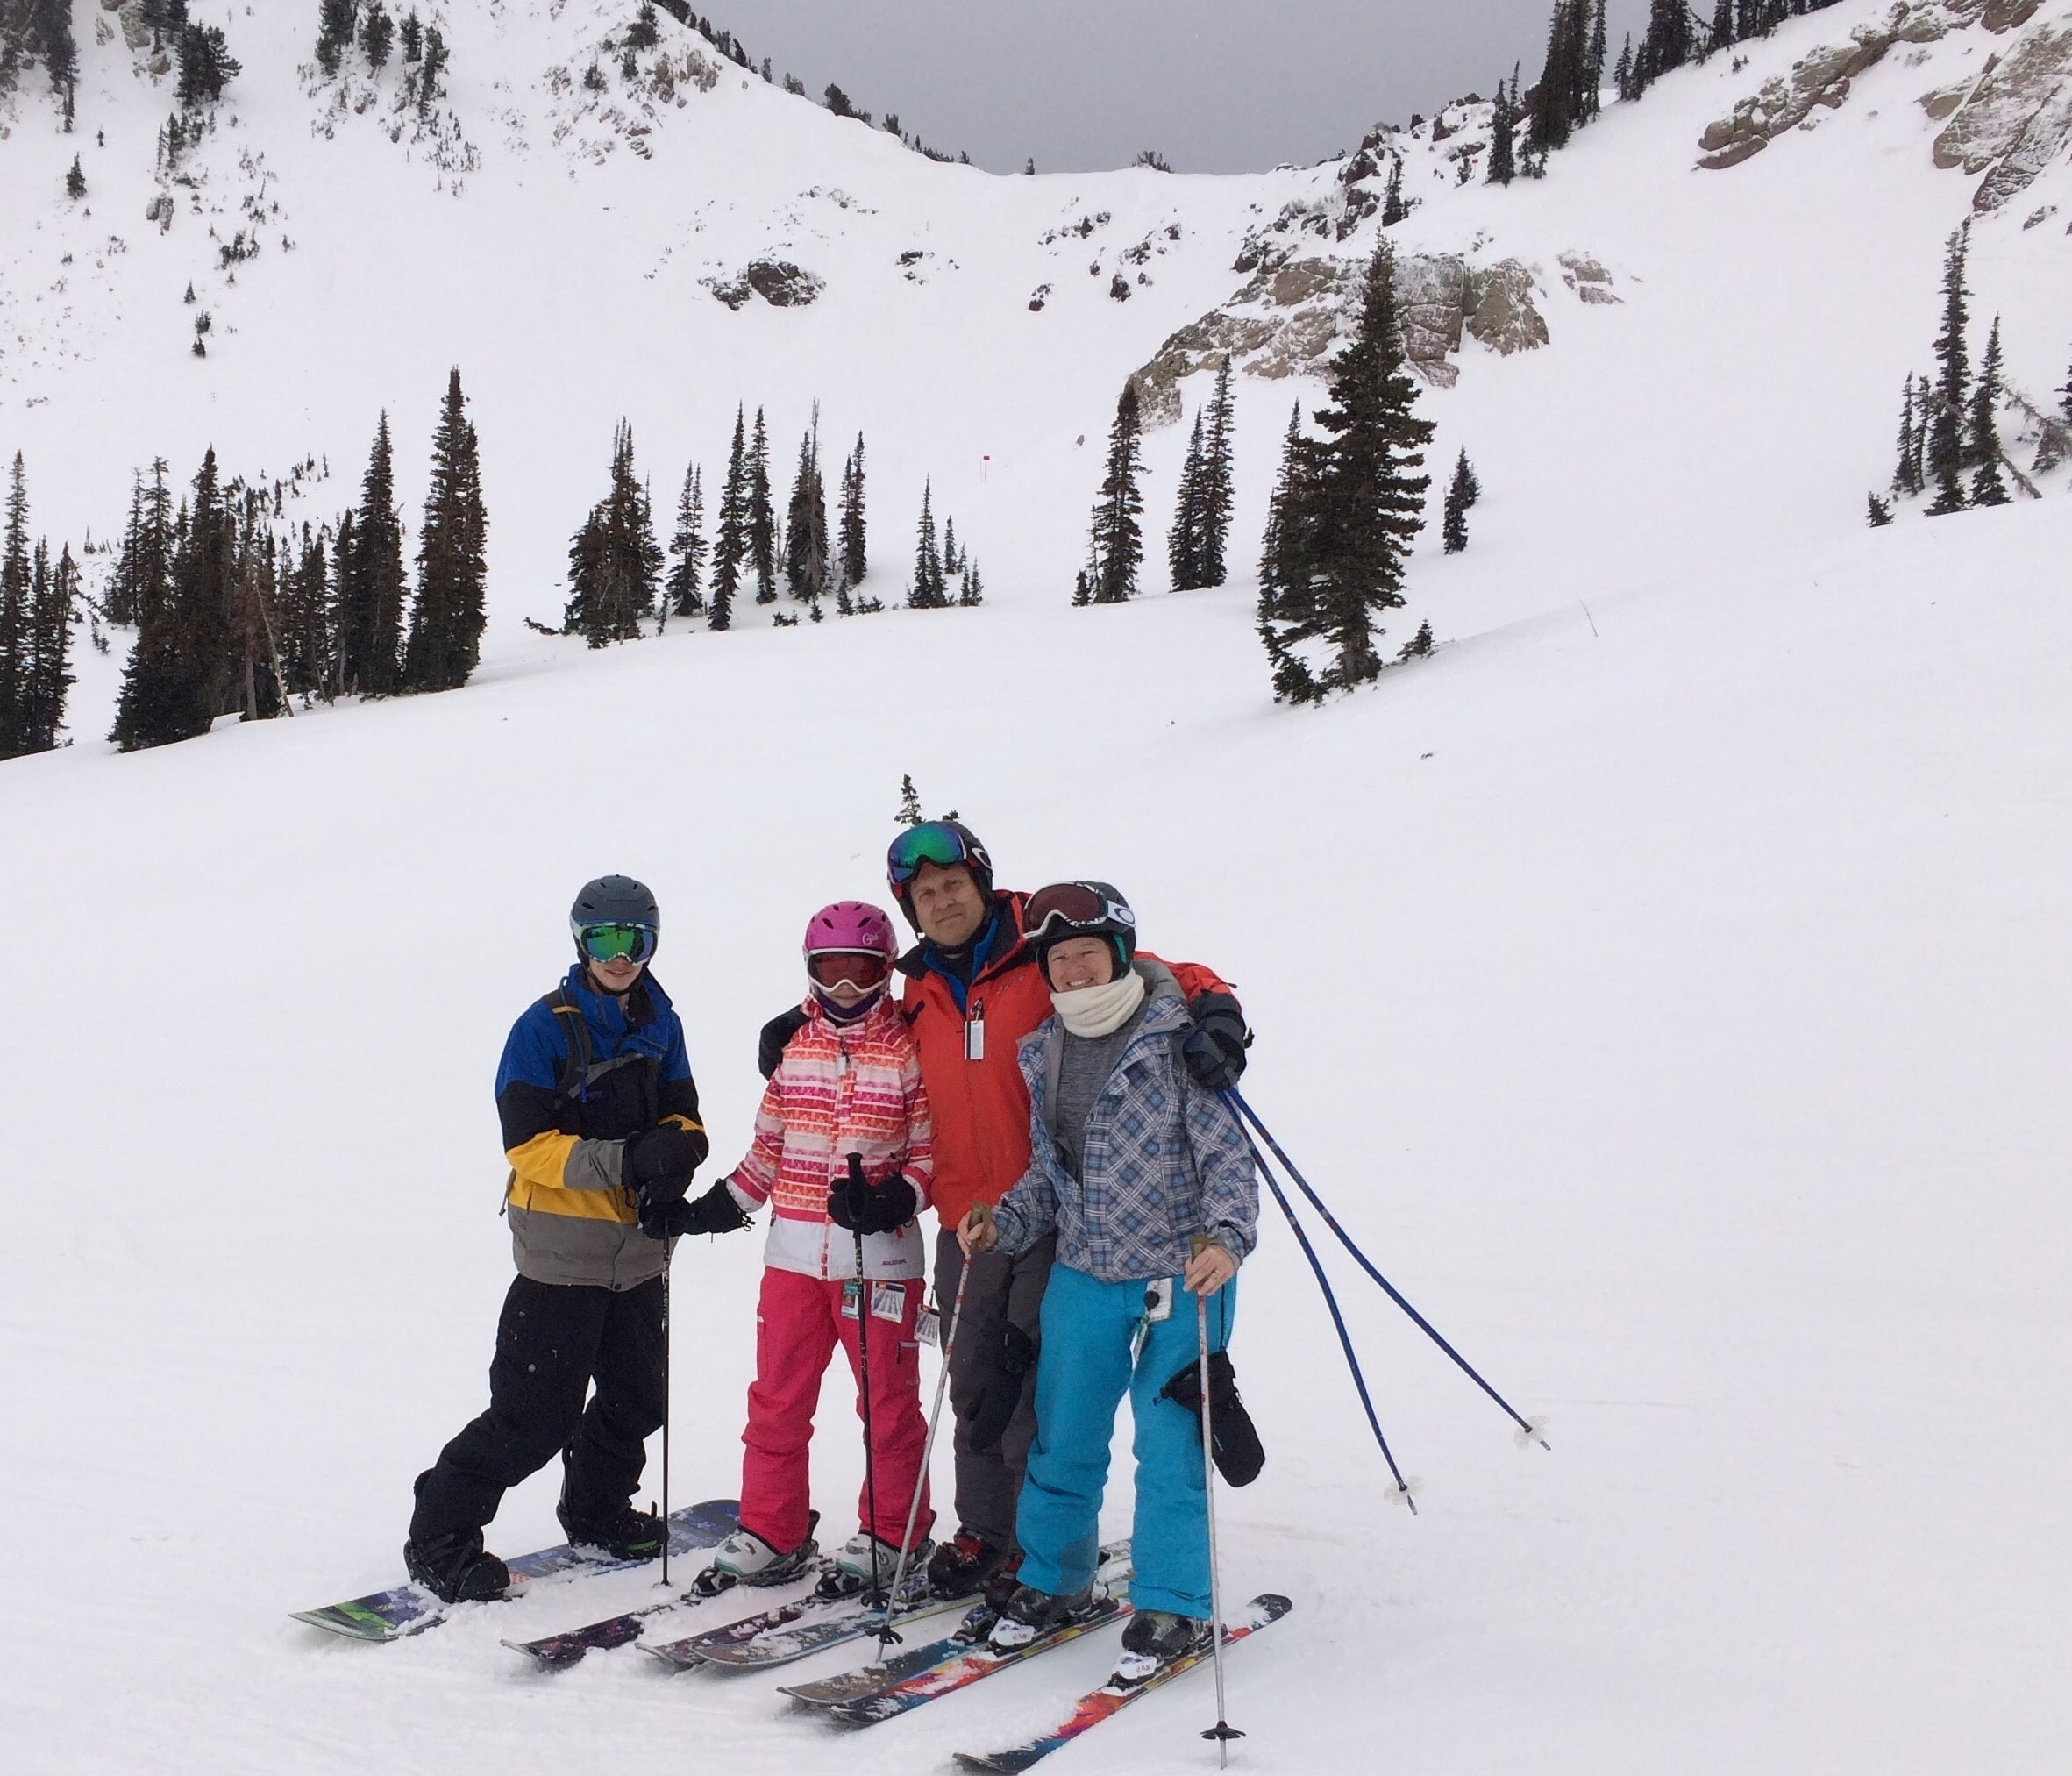 VLACS instructor with family on ski slopes